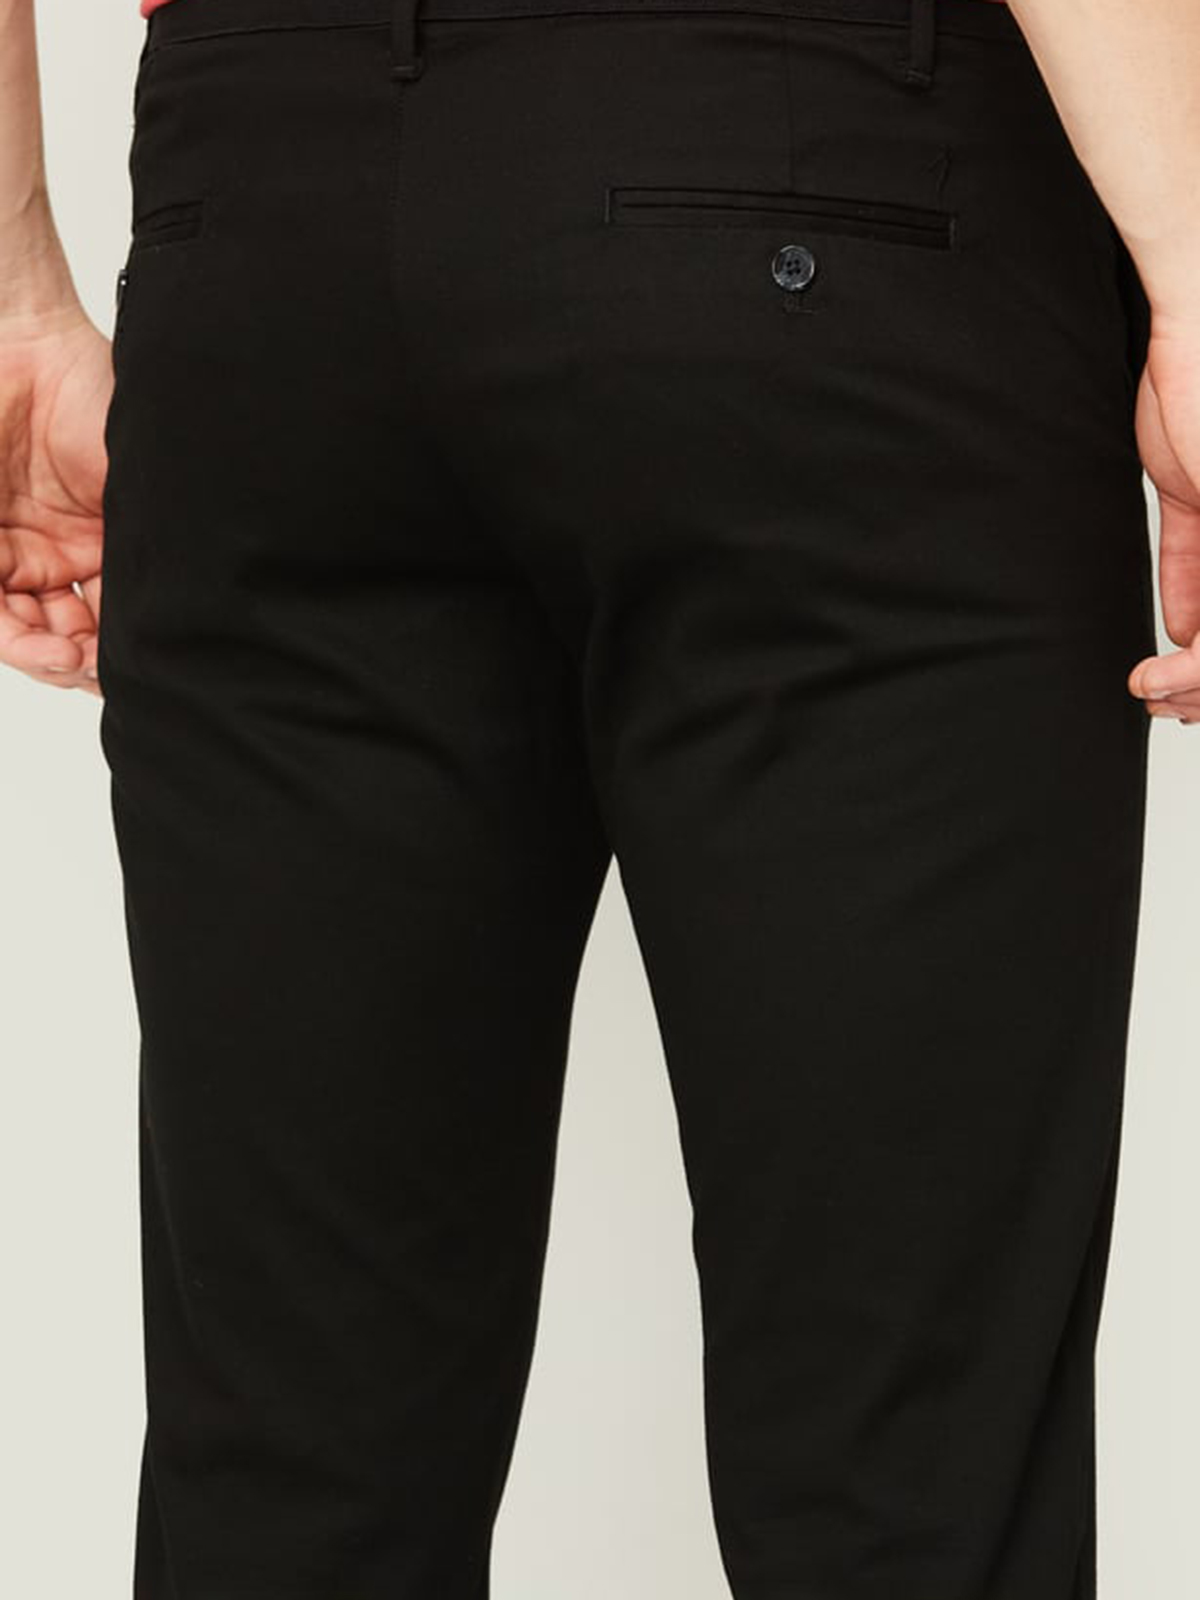 Buy Men Urban Fit Cotton Trouser Online | Indian Terrain